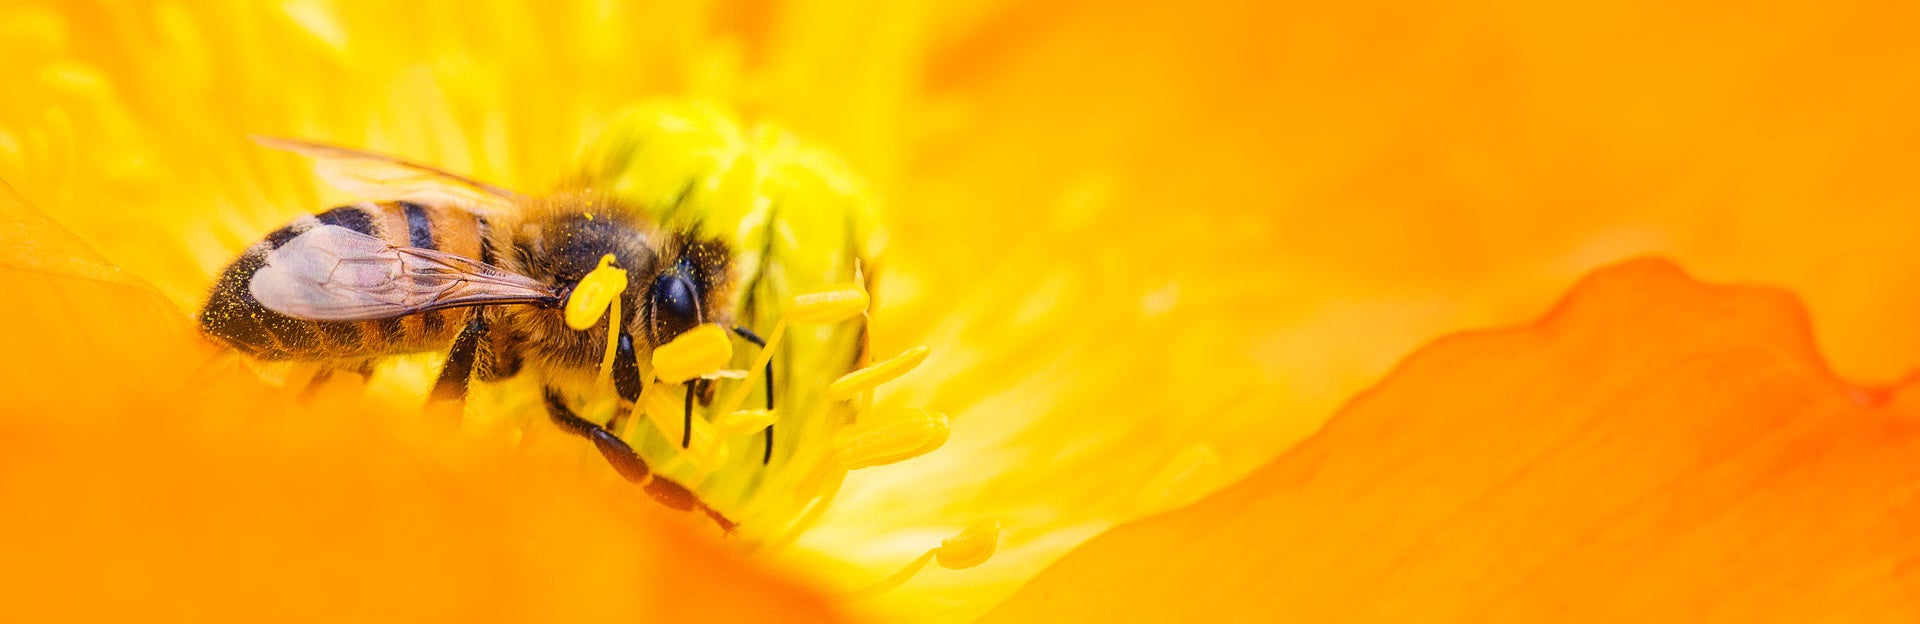 Bee on yellow flower, source: pexel.com